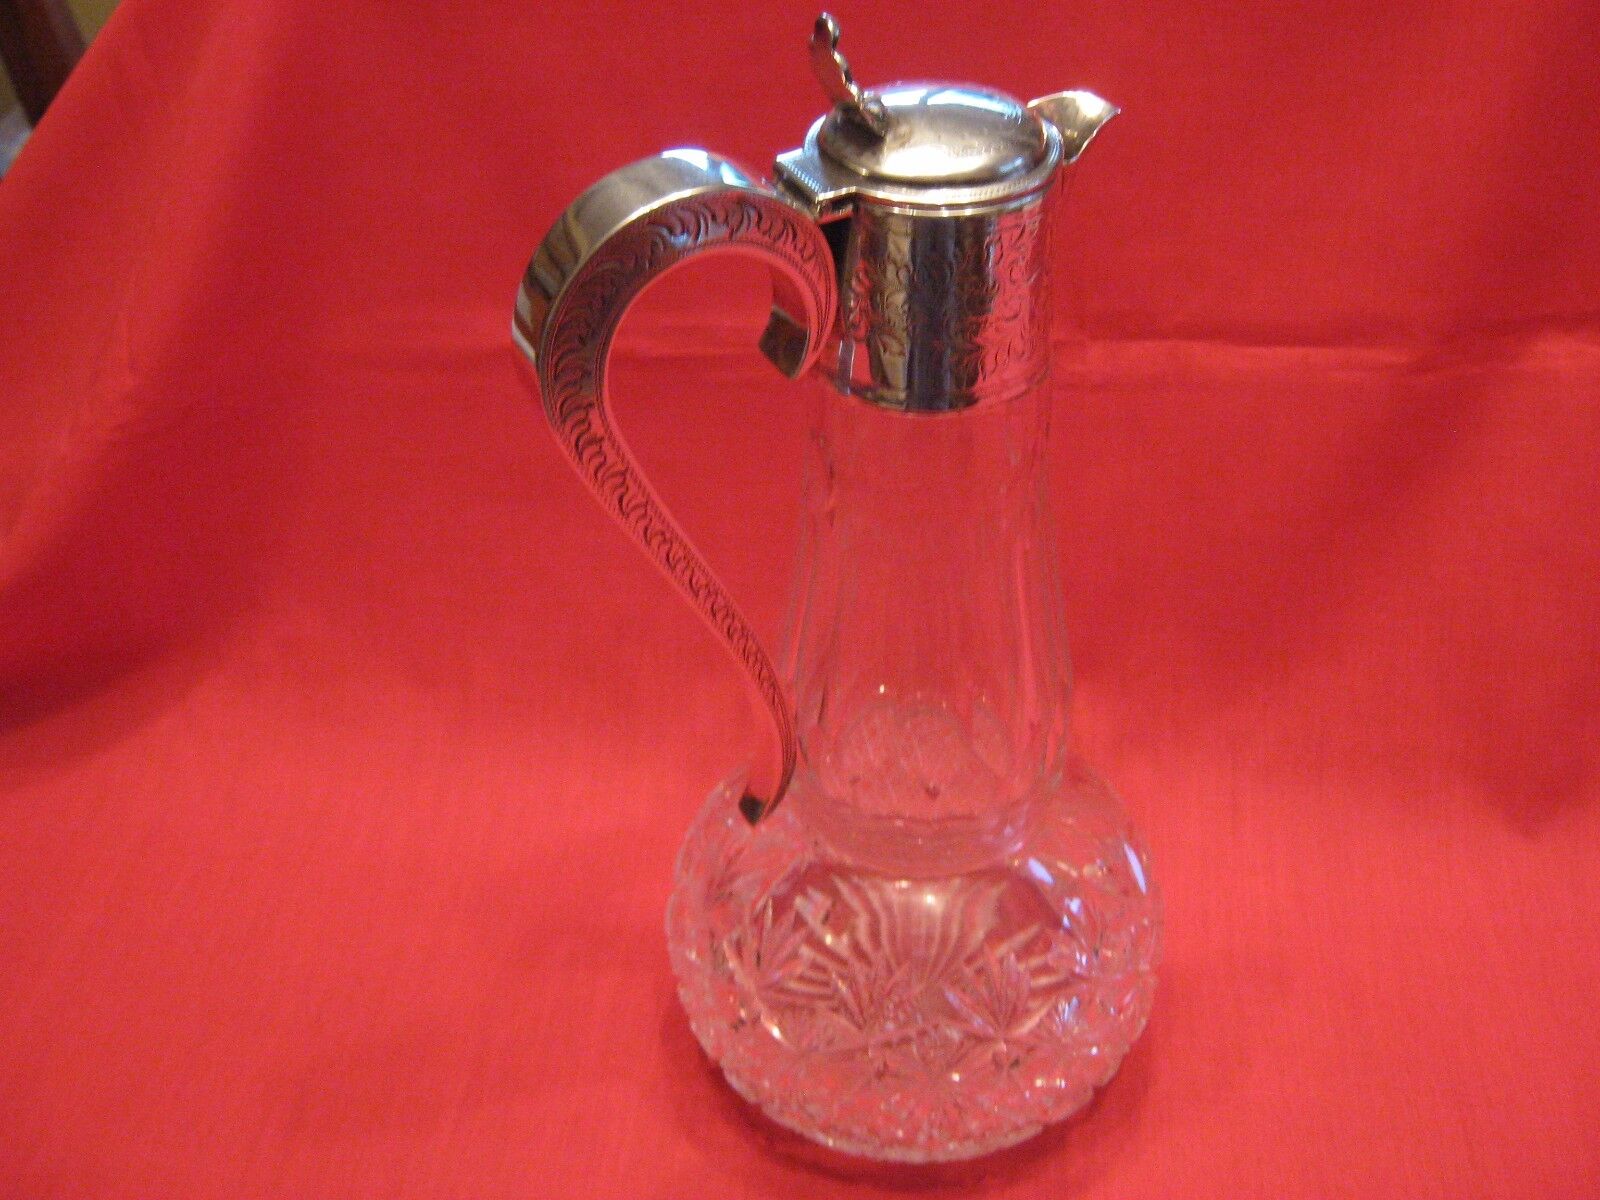 WONDERFUL 1895 SOLID SILVER & CUT GLASS CLARET JUG / WINE EWER.LOVELY PIECE.